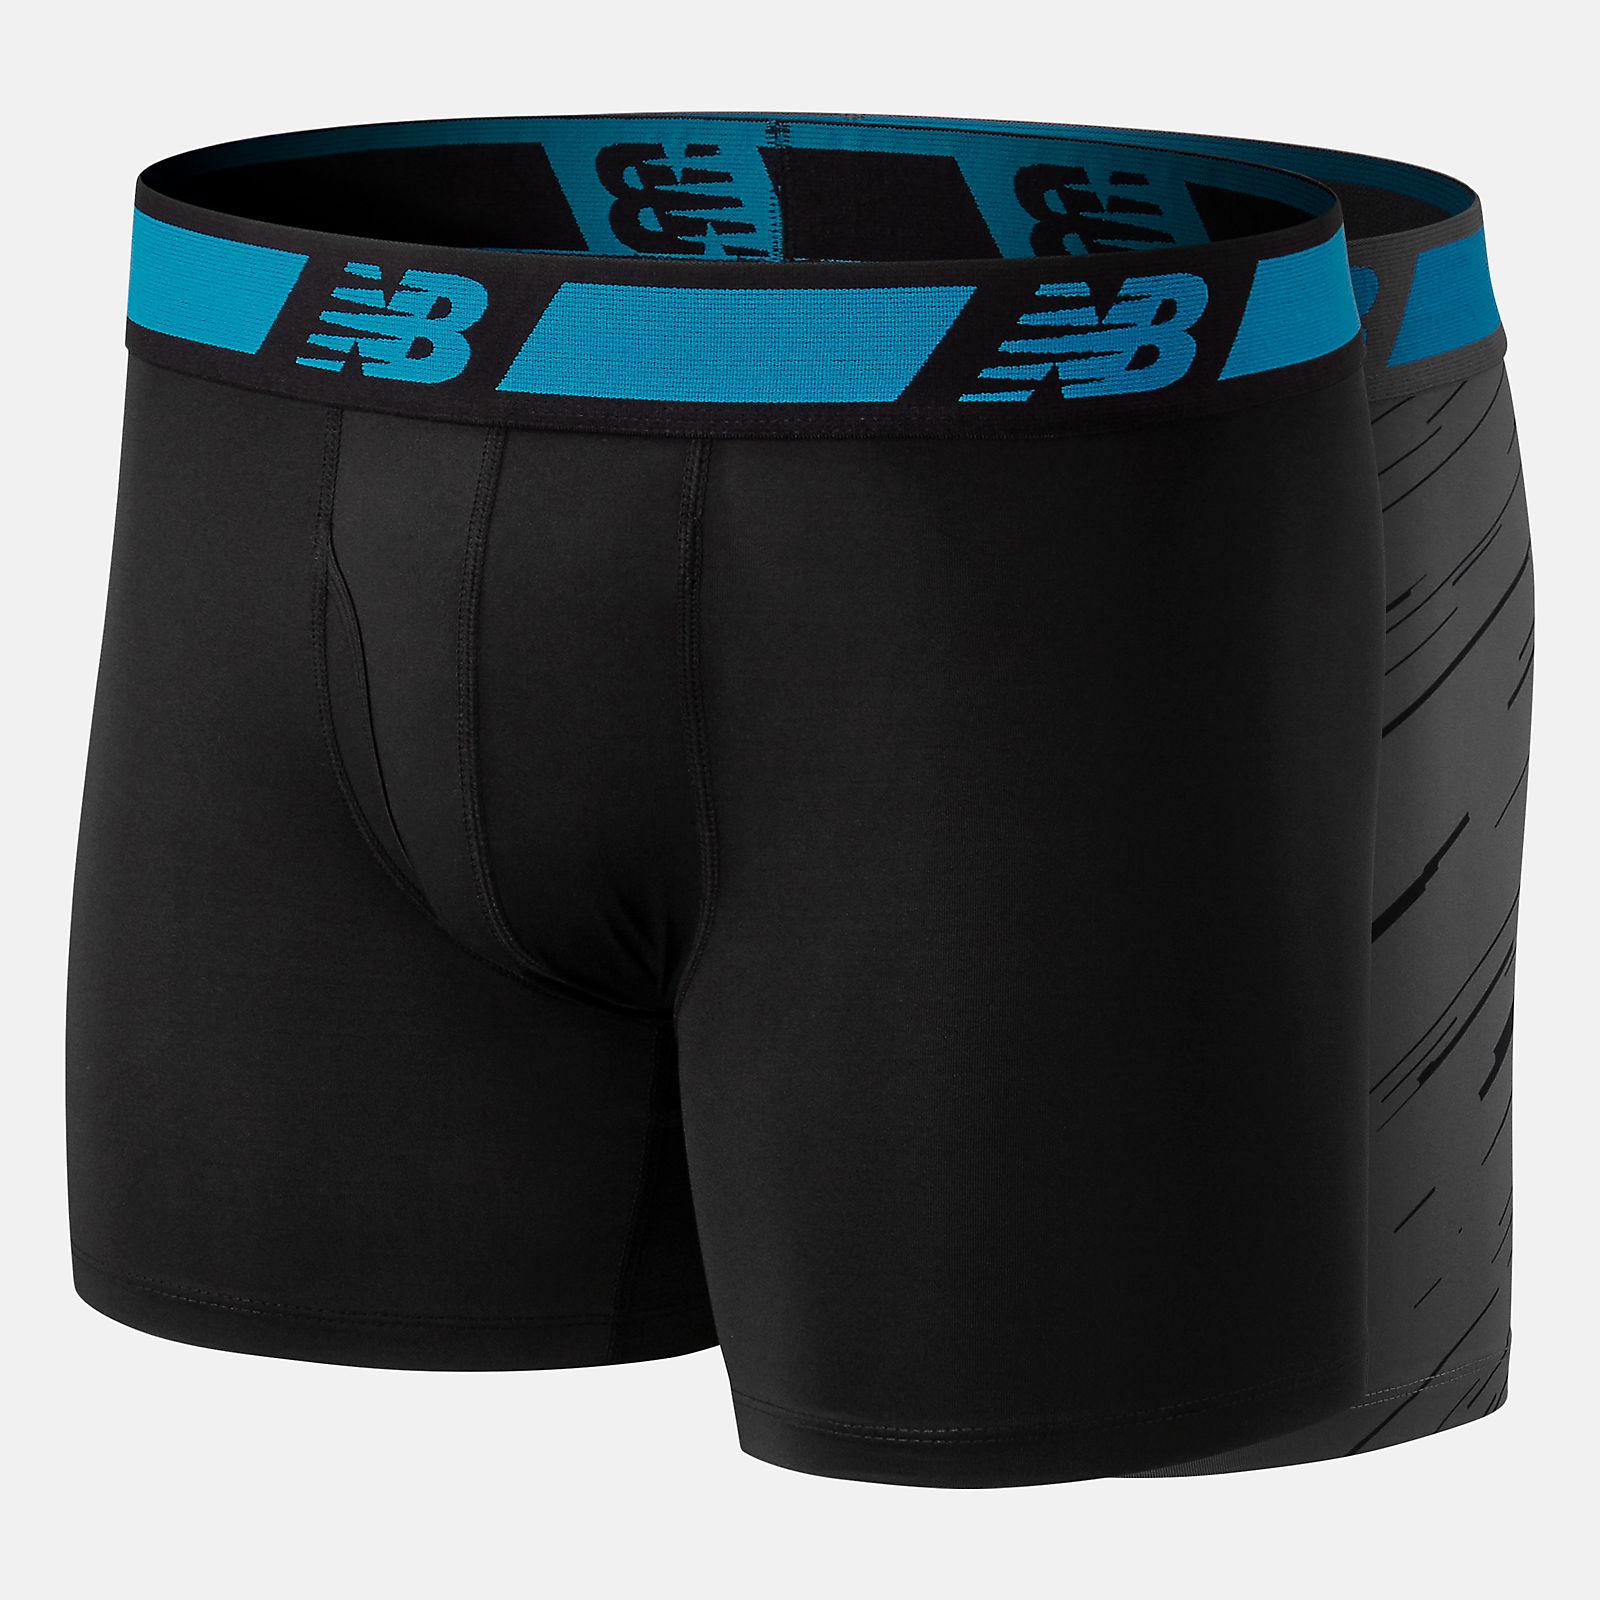 Mens Comfortable Underwear Basketball Pattern Boxer Briefs for Men